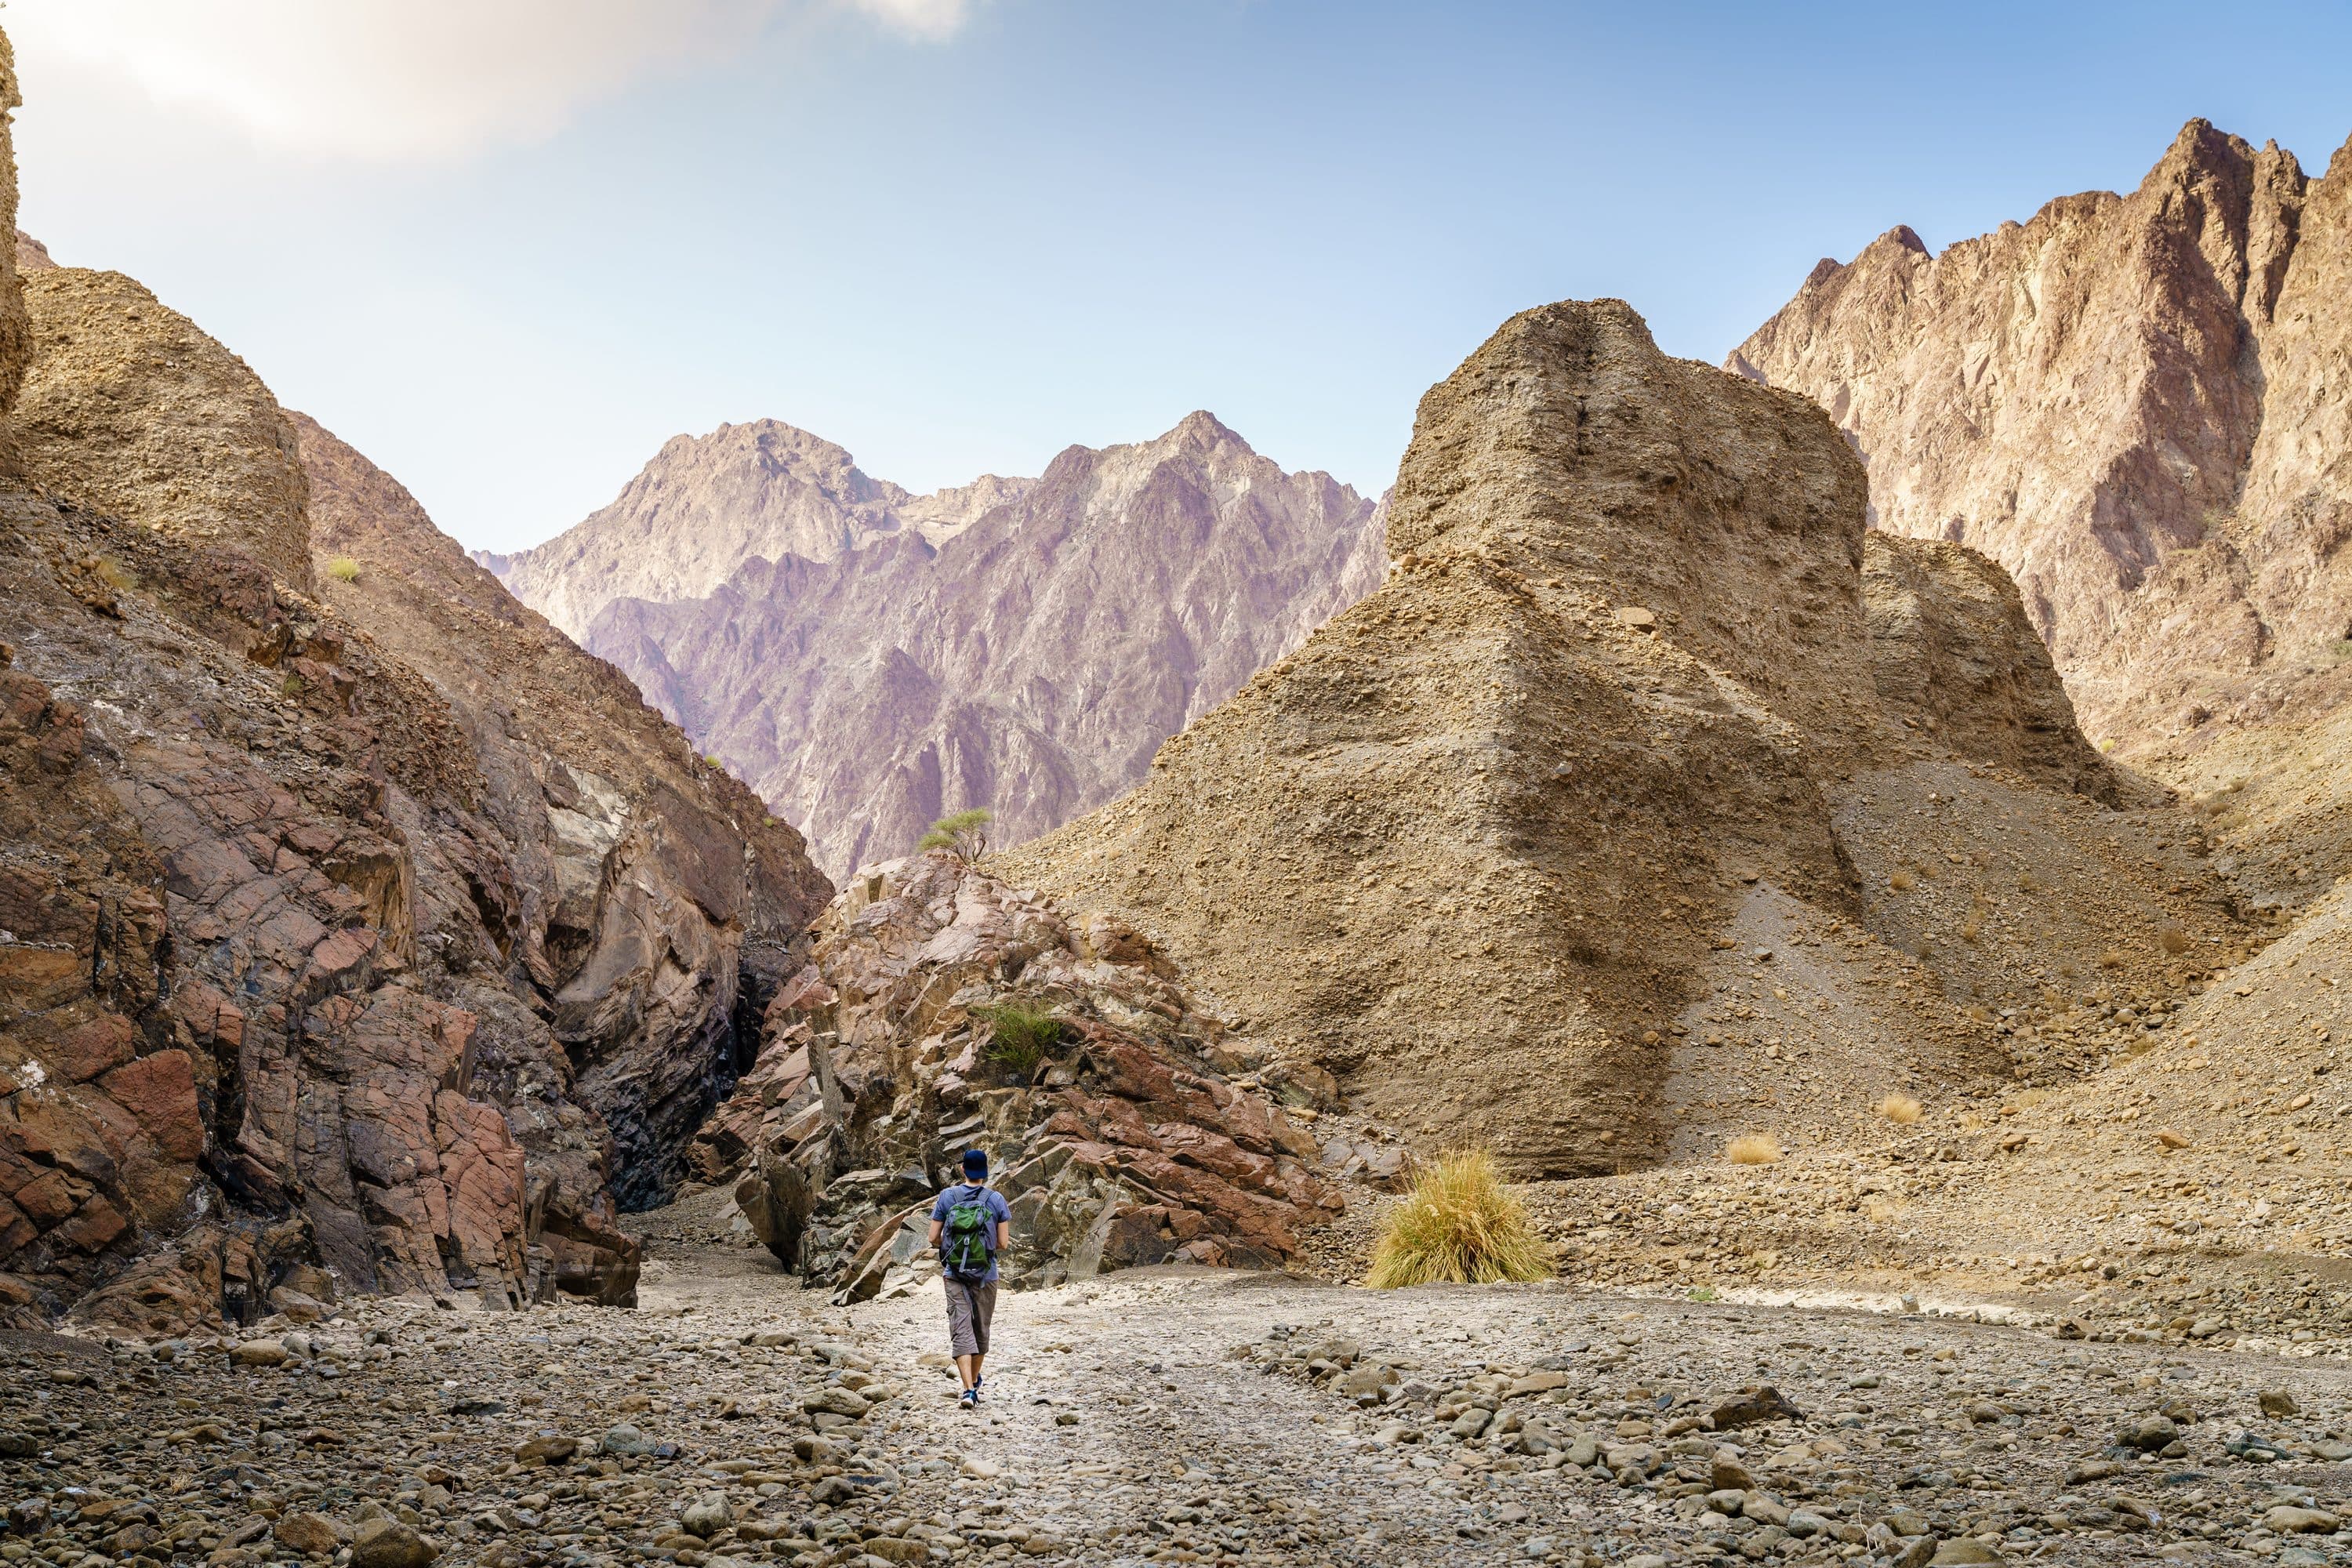 Man hikes through mountain pass of the Hatta Trails, Dubai